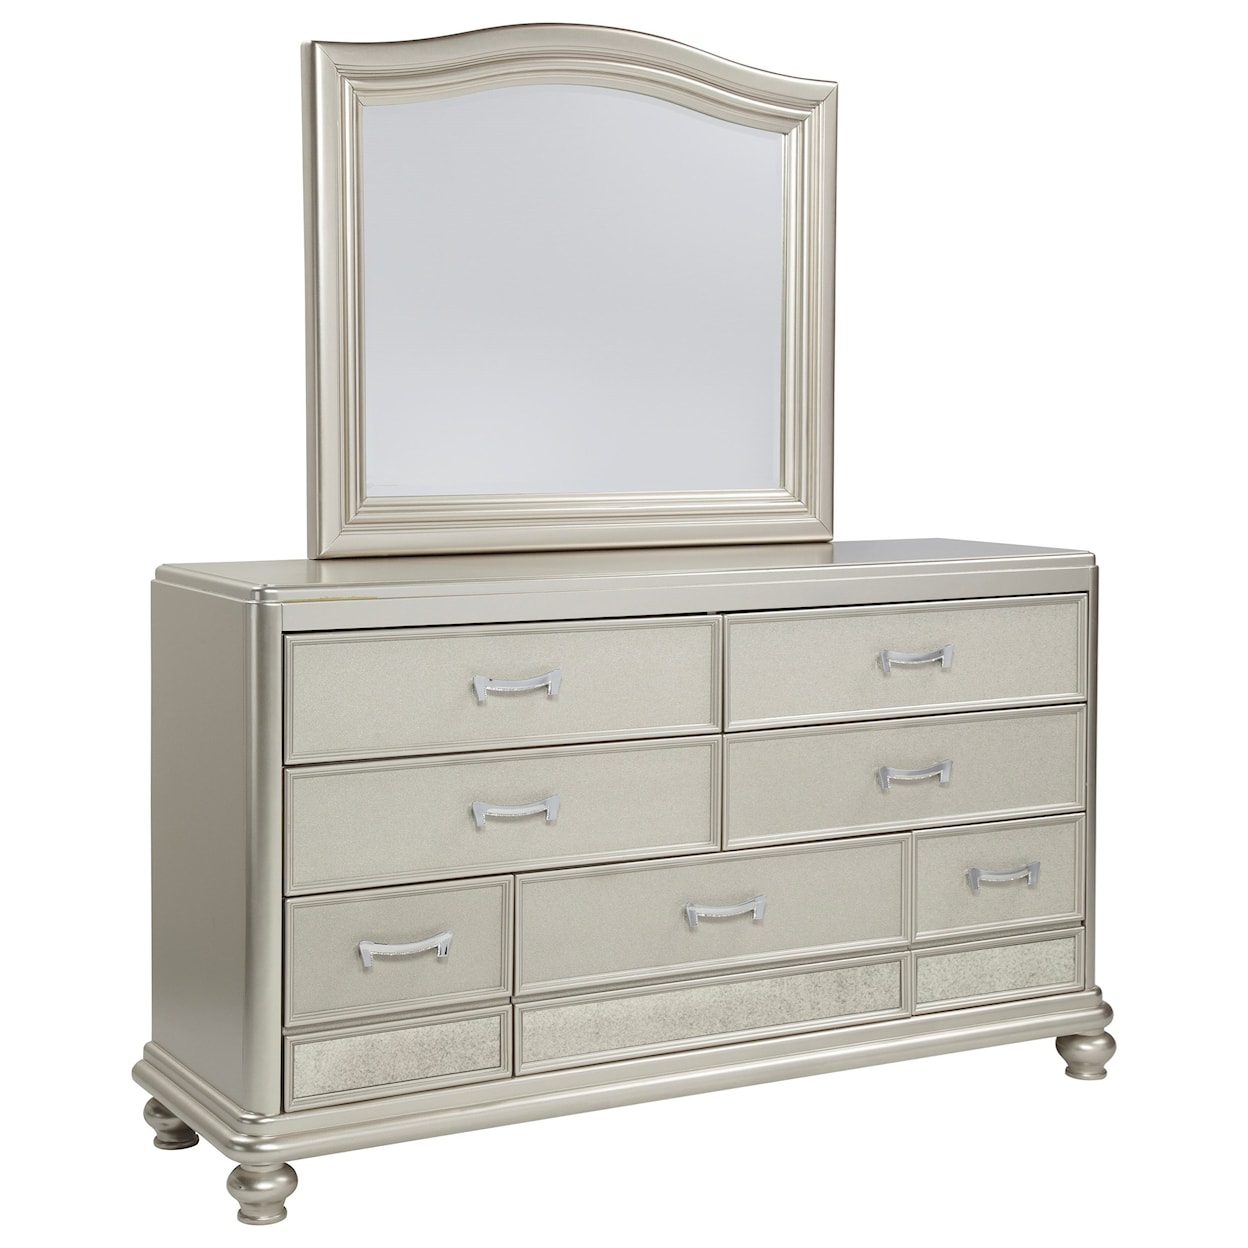 Ashley Furniture Signature Design Coralayne Bedroom Mirror